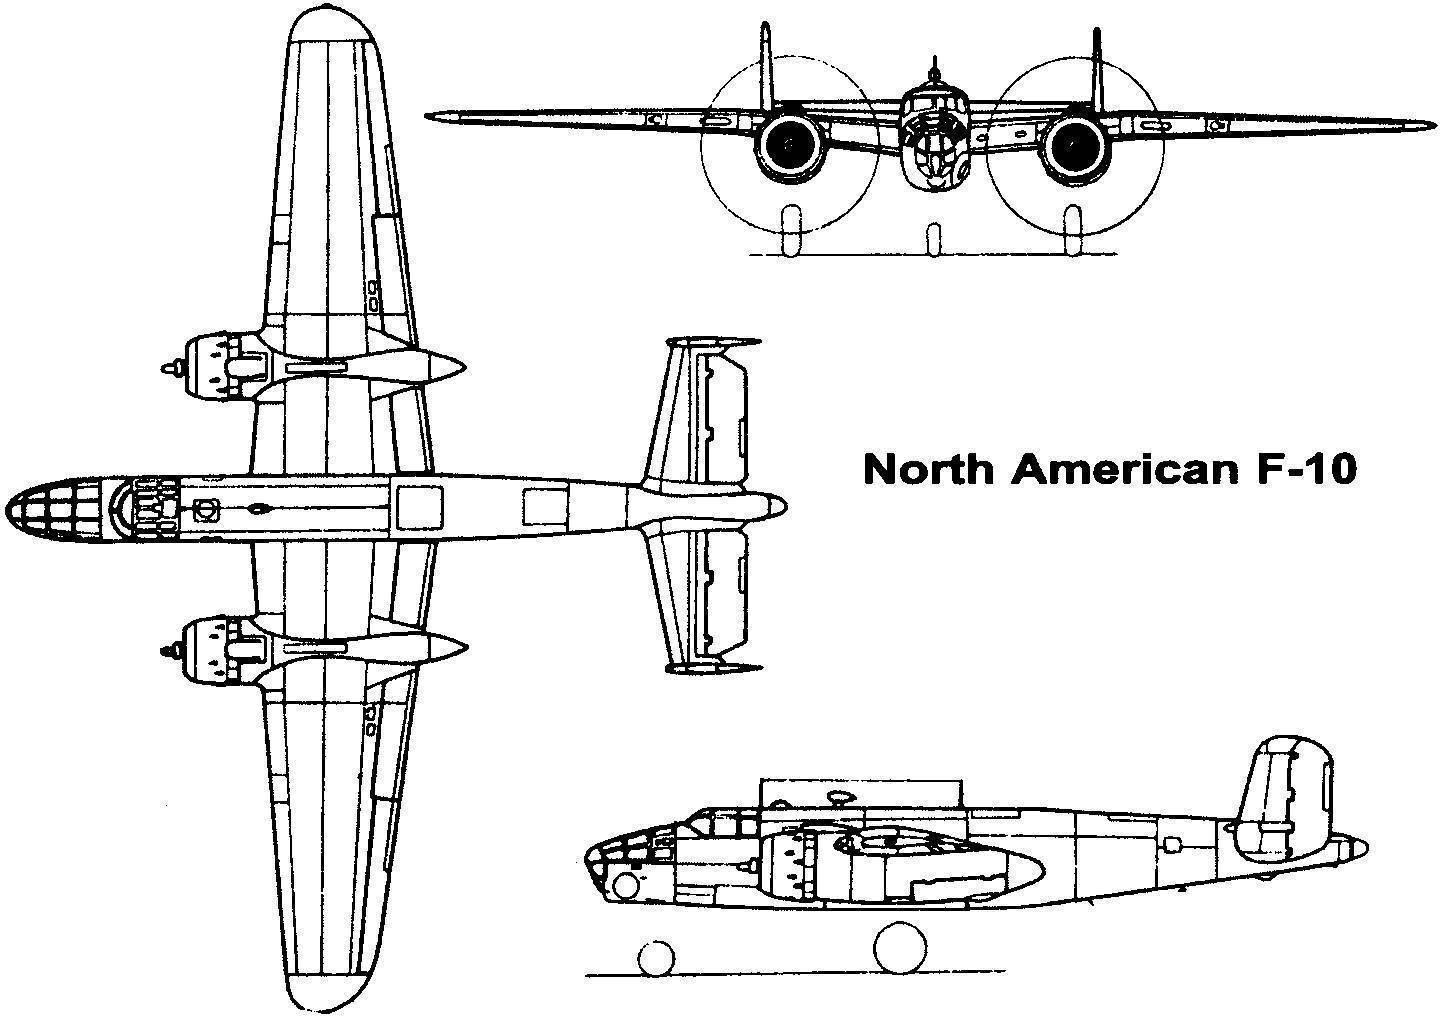 North american b-25 mitchell